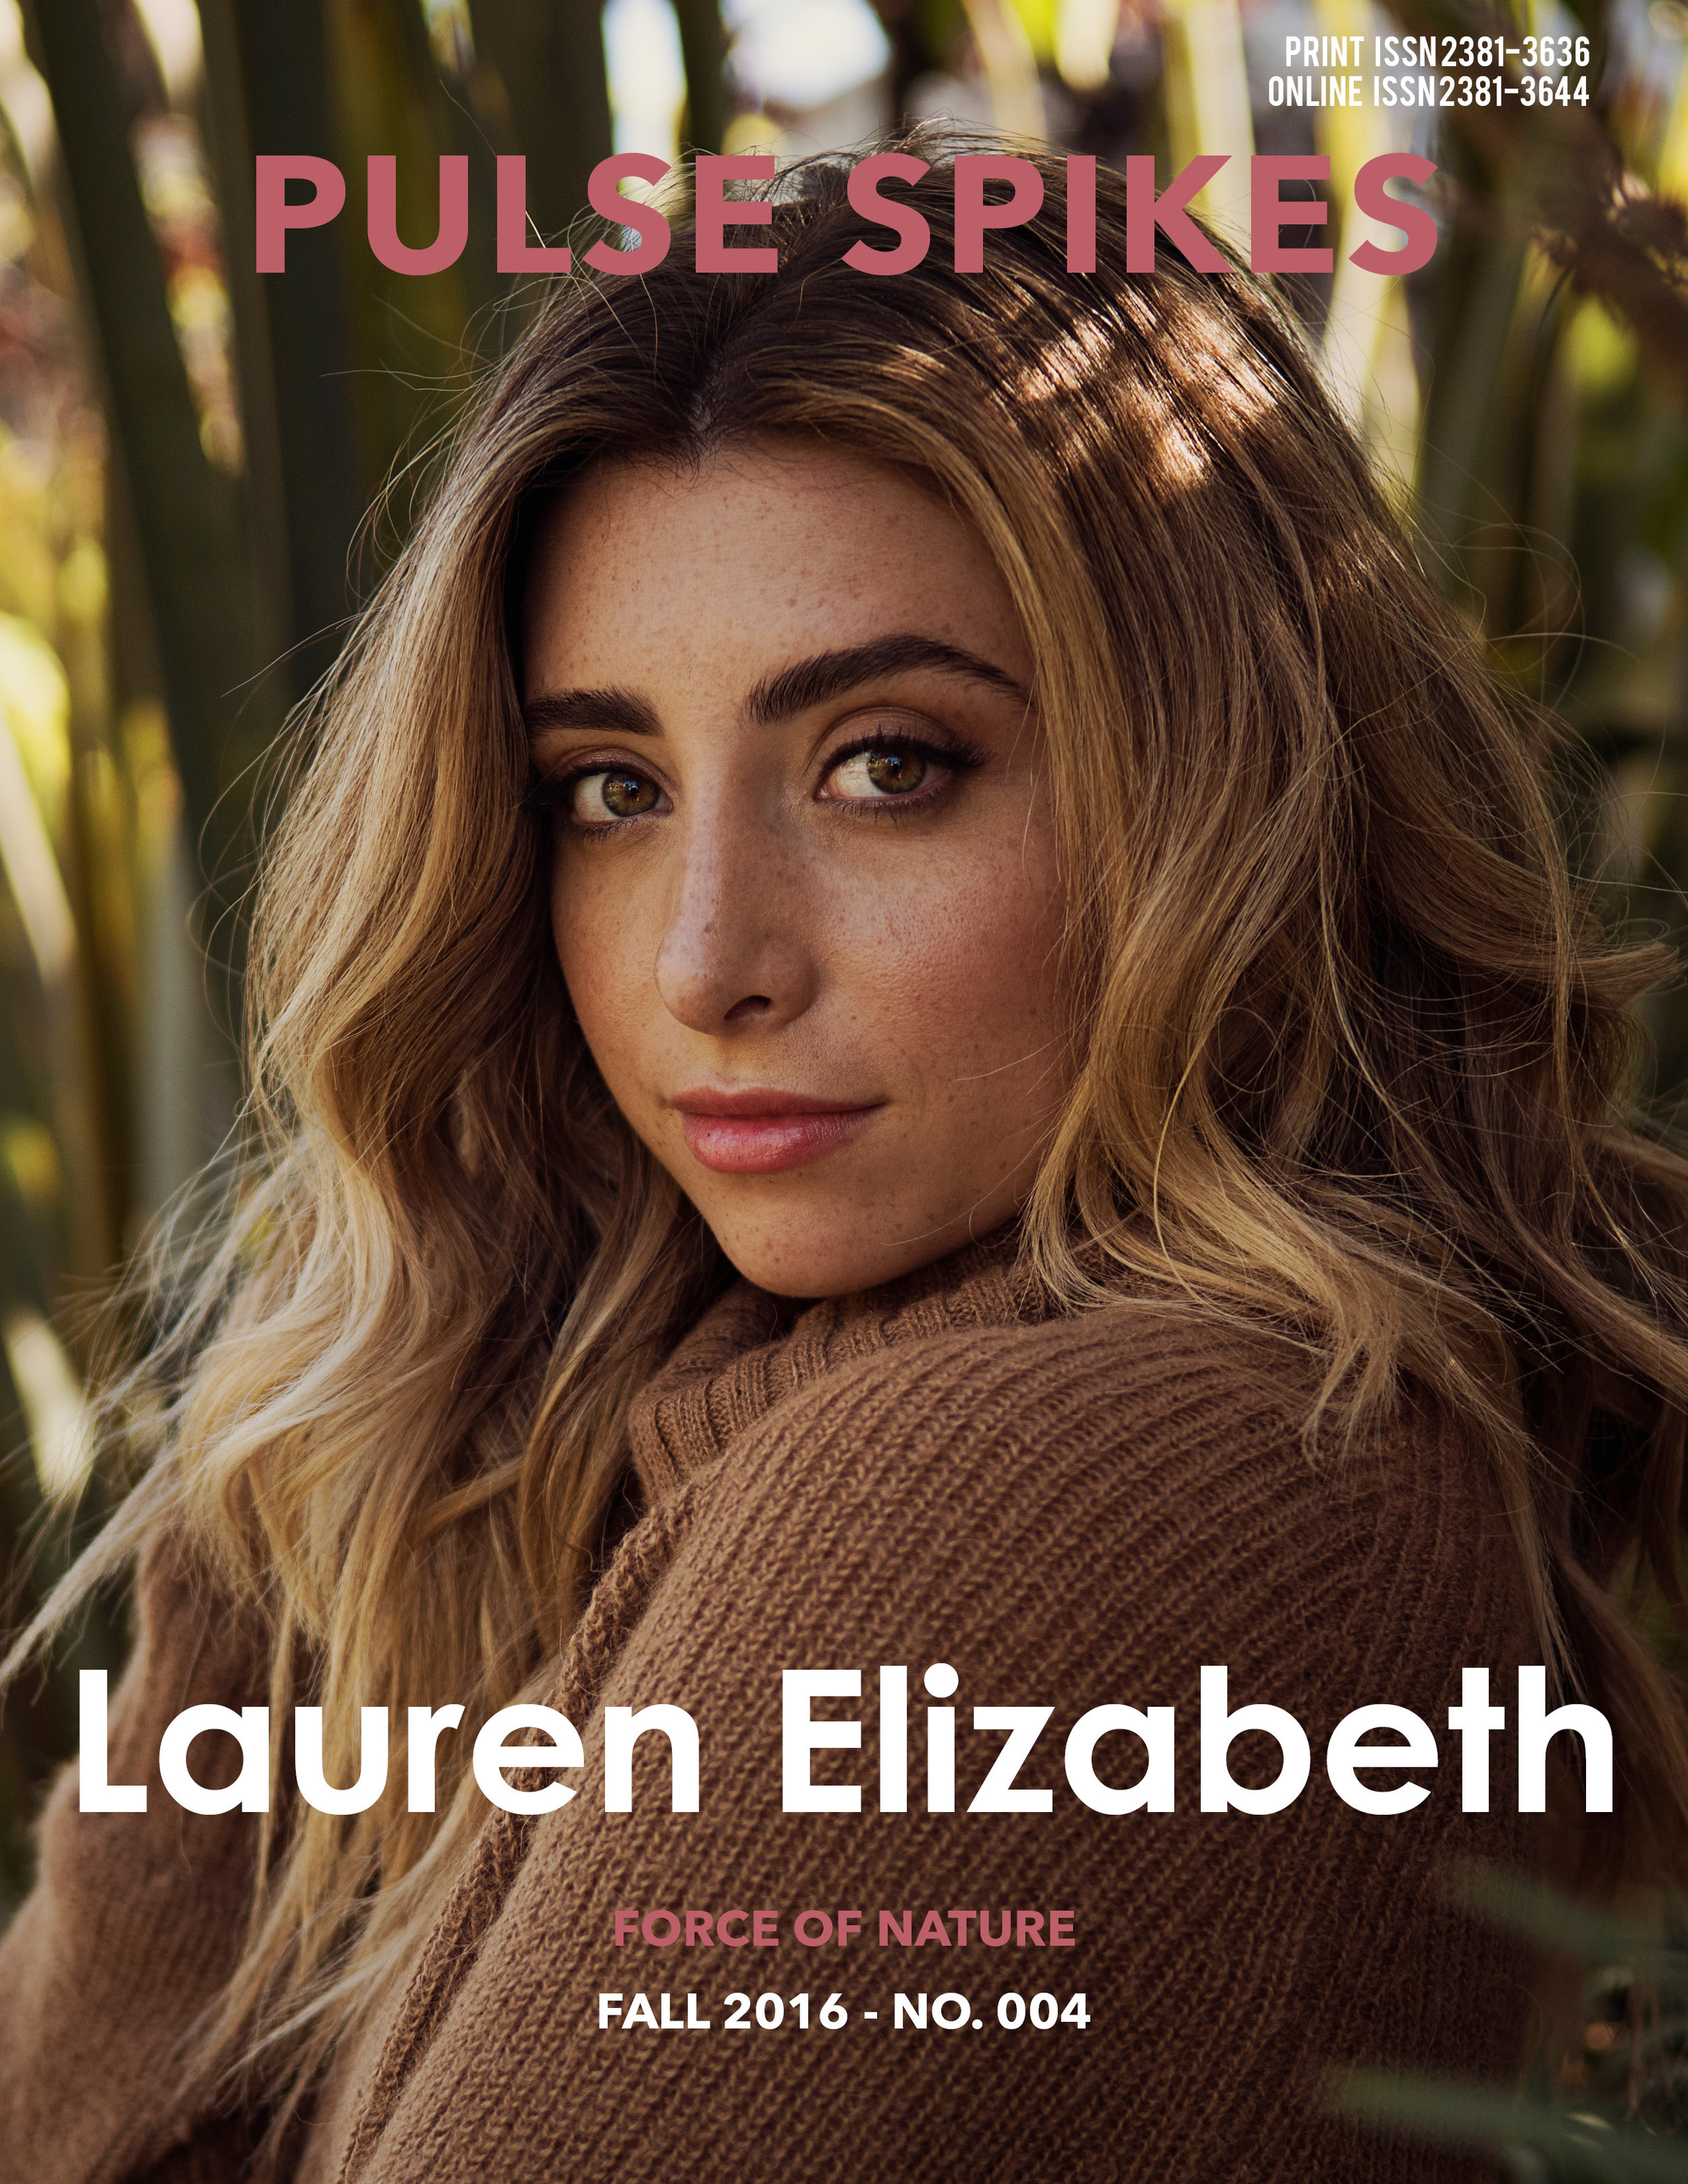 Makeup & hair for Lauren Elizabeth // Pulse Spikes